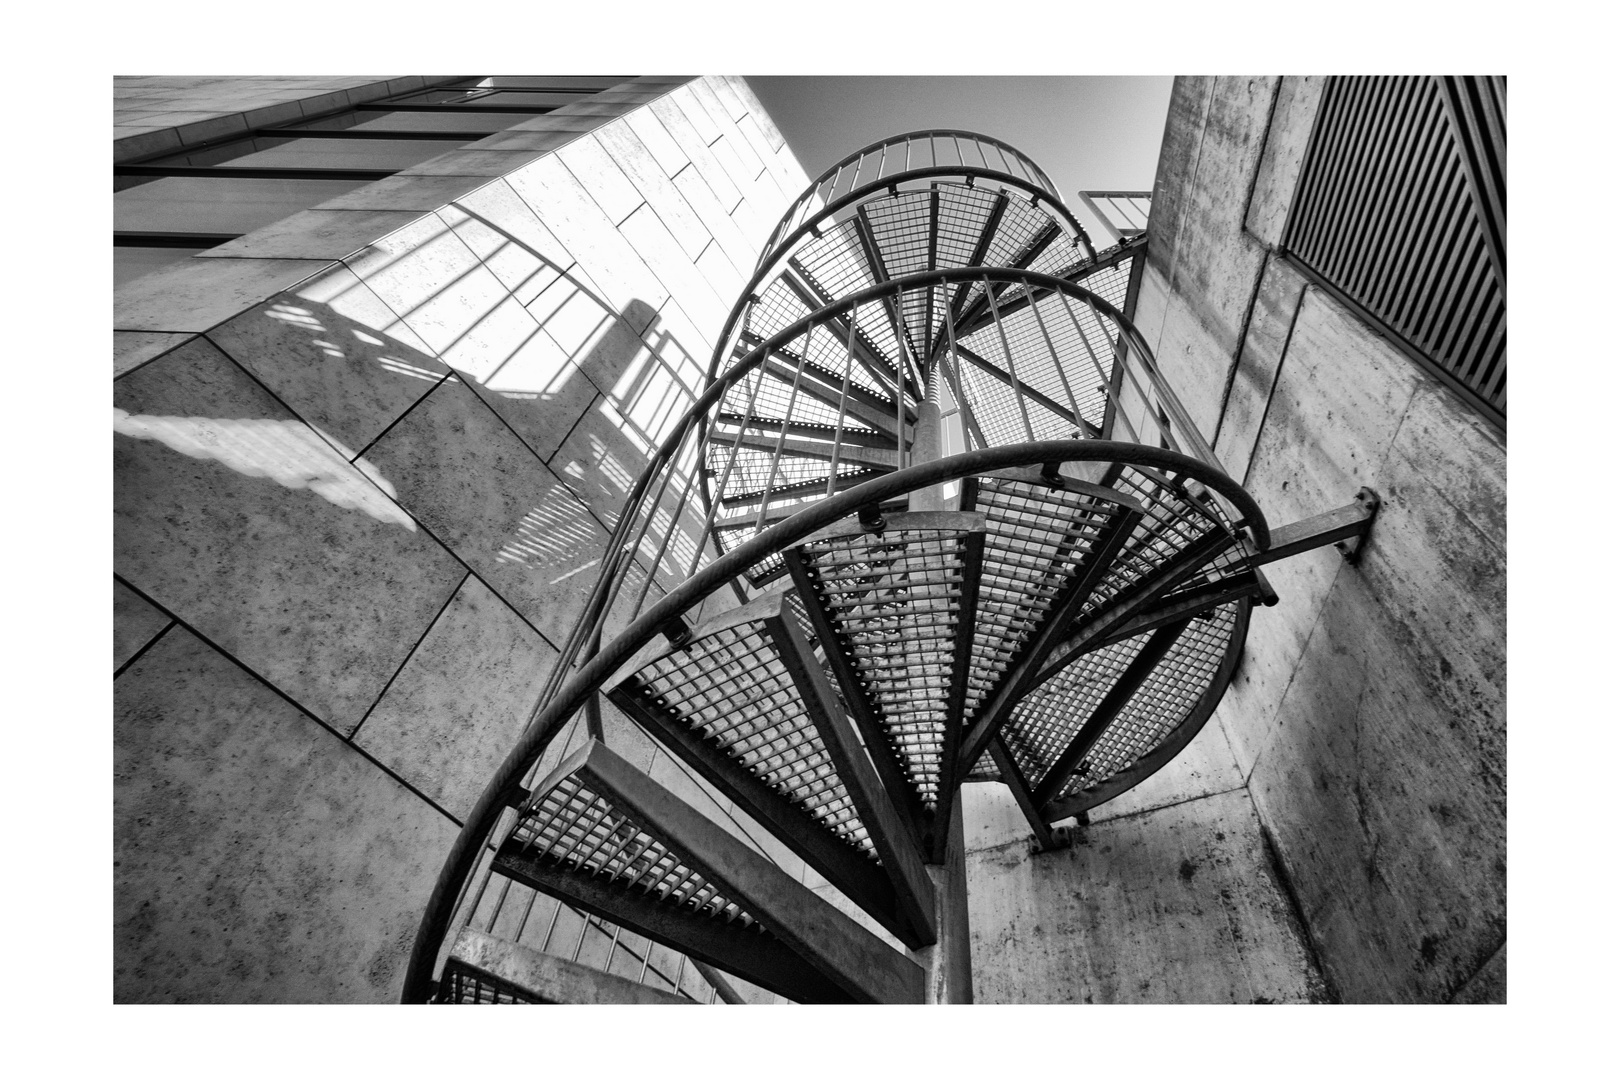 spiral staircase_04